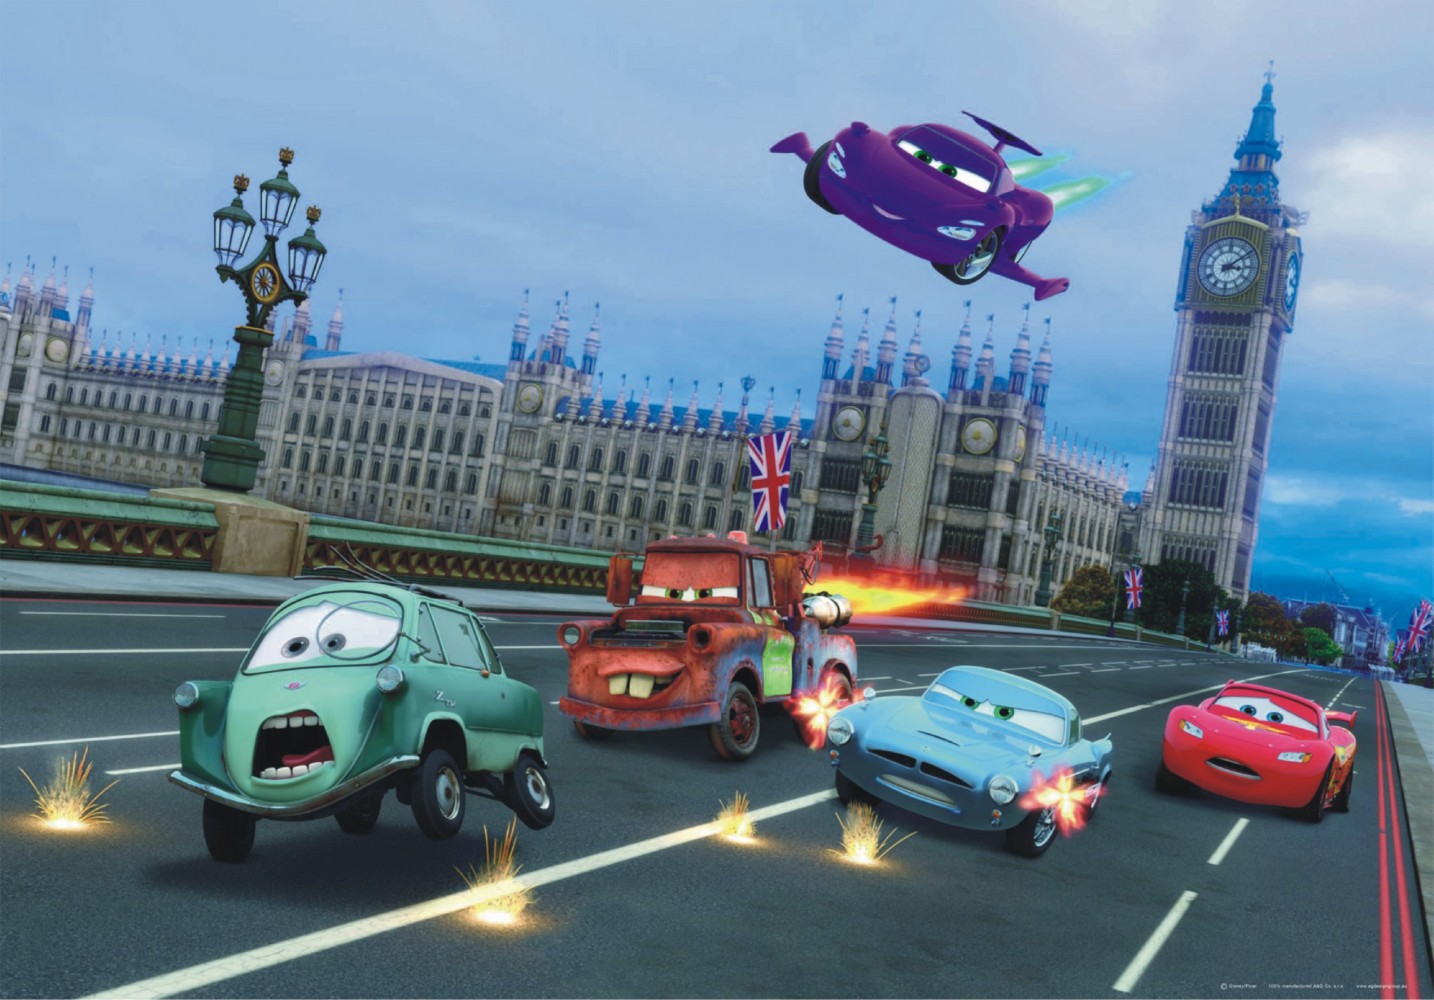 XXL Poster Wall mural wallpaper Disney Cars 2 London hunting Big Ben